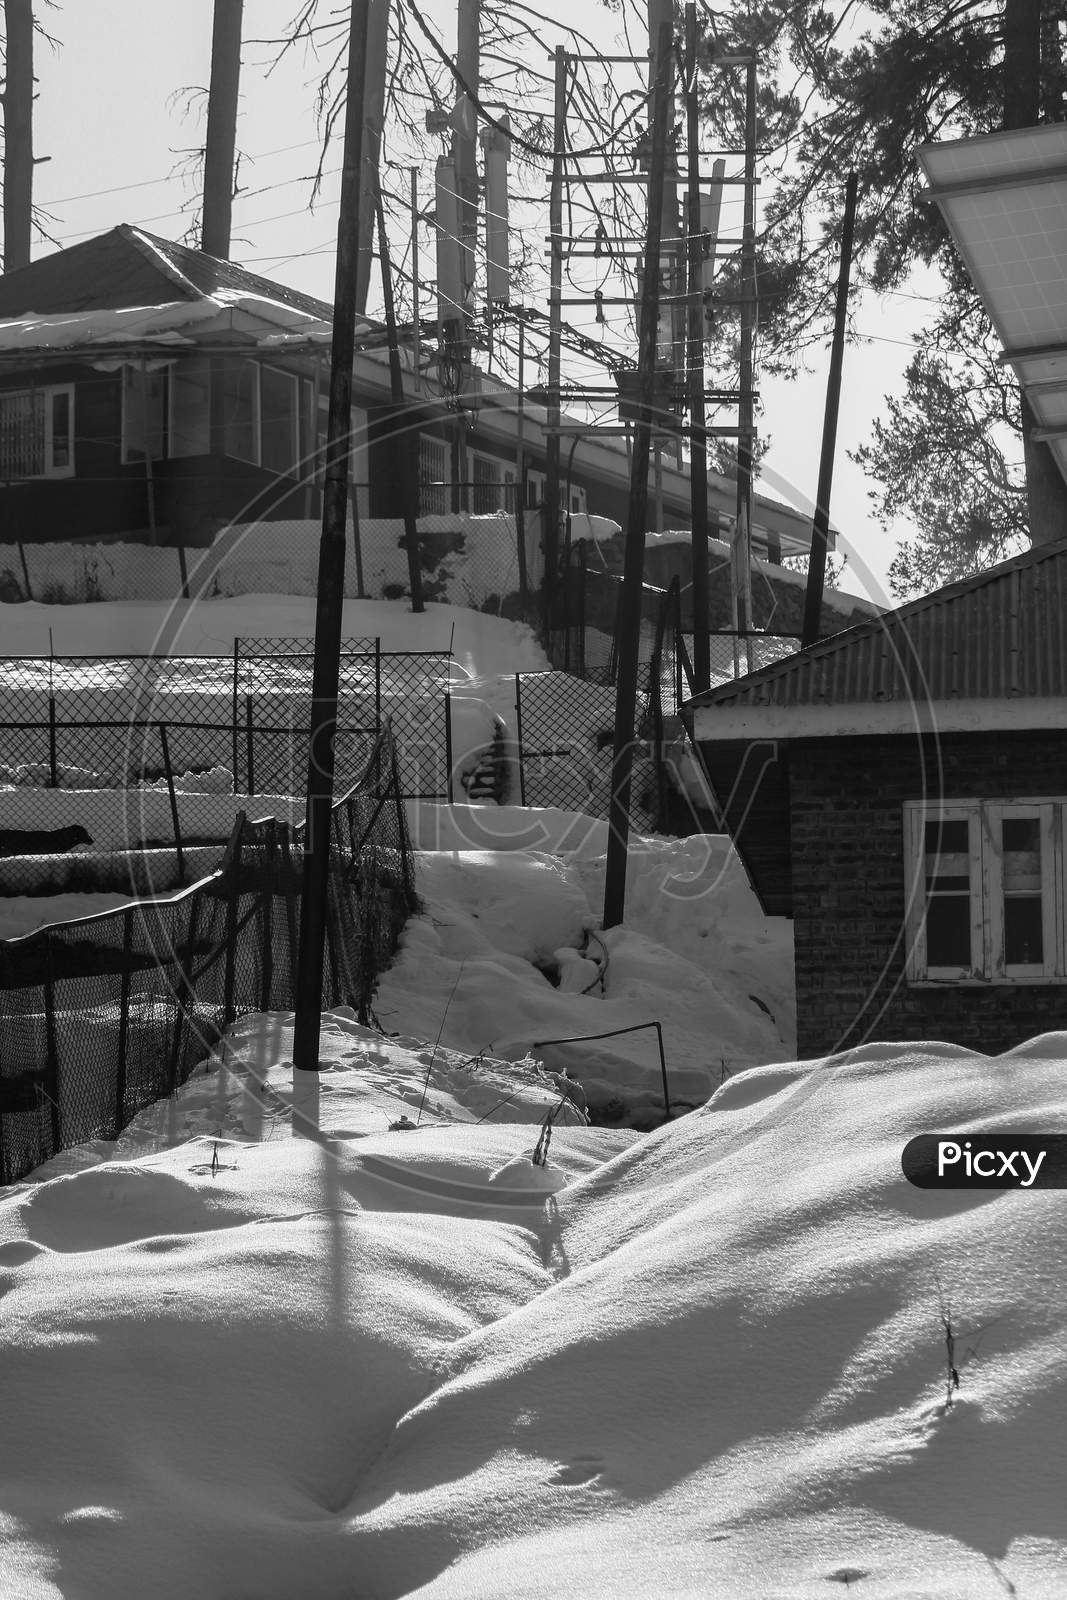 A Snowy Neighbourhood In Gulmarg, Kashmir